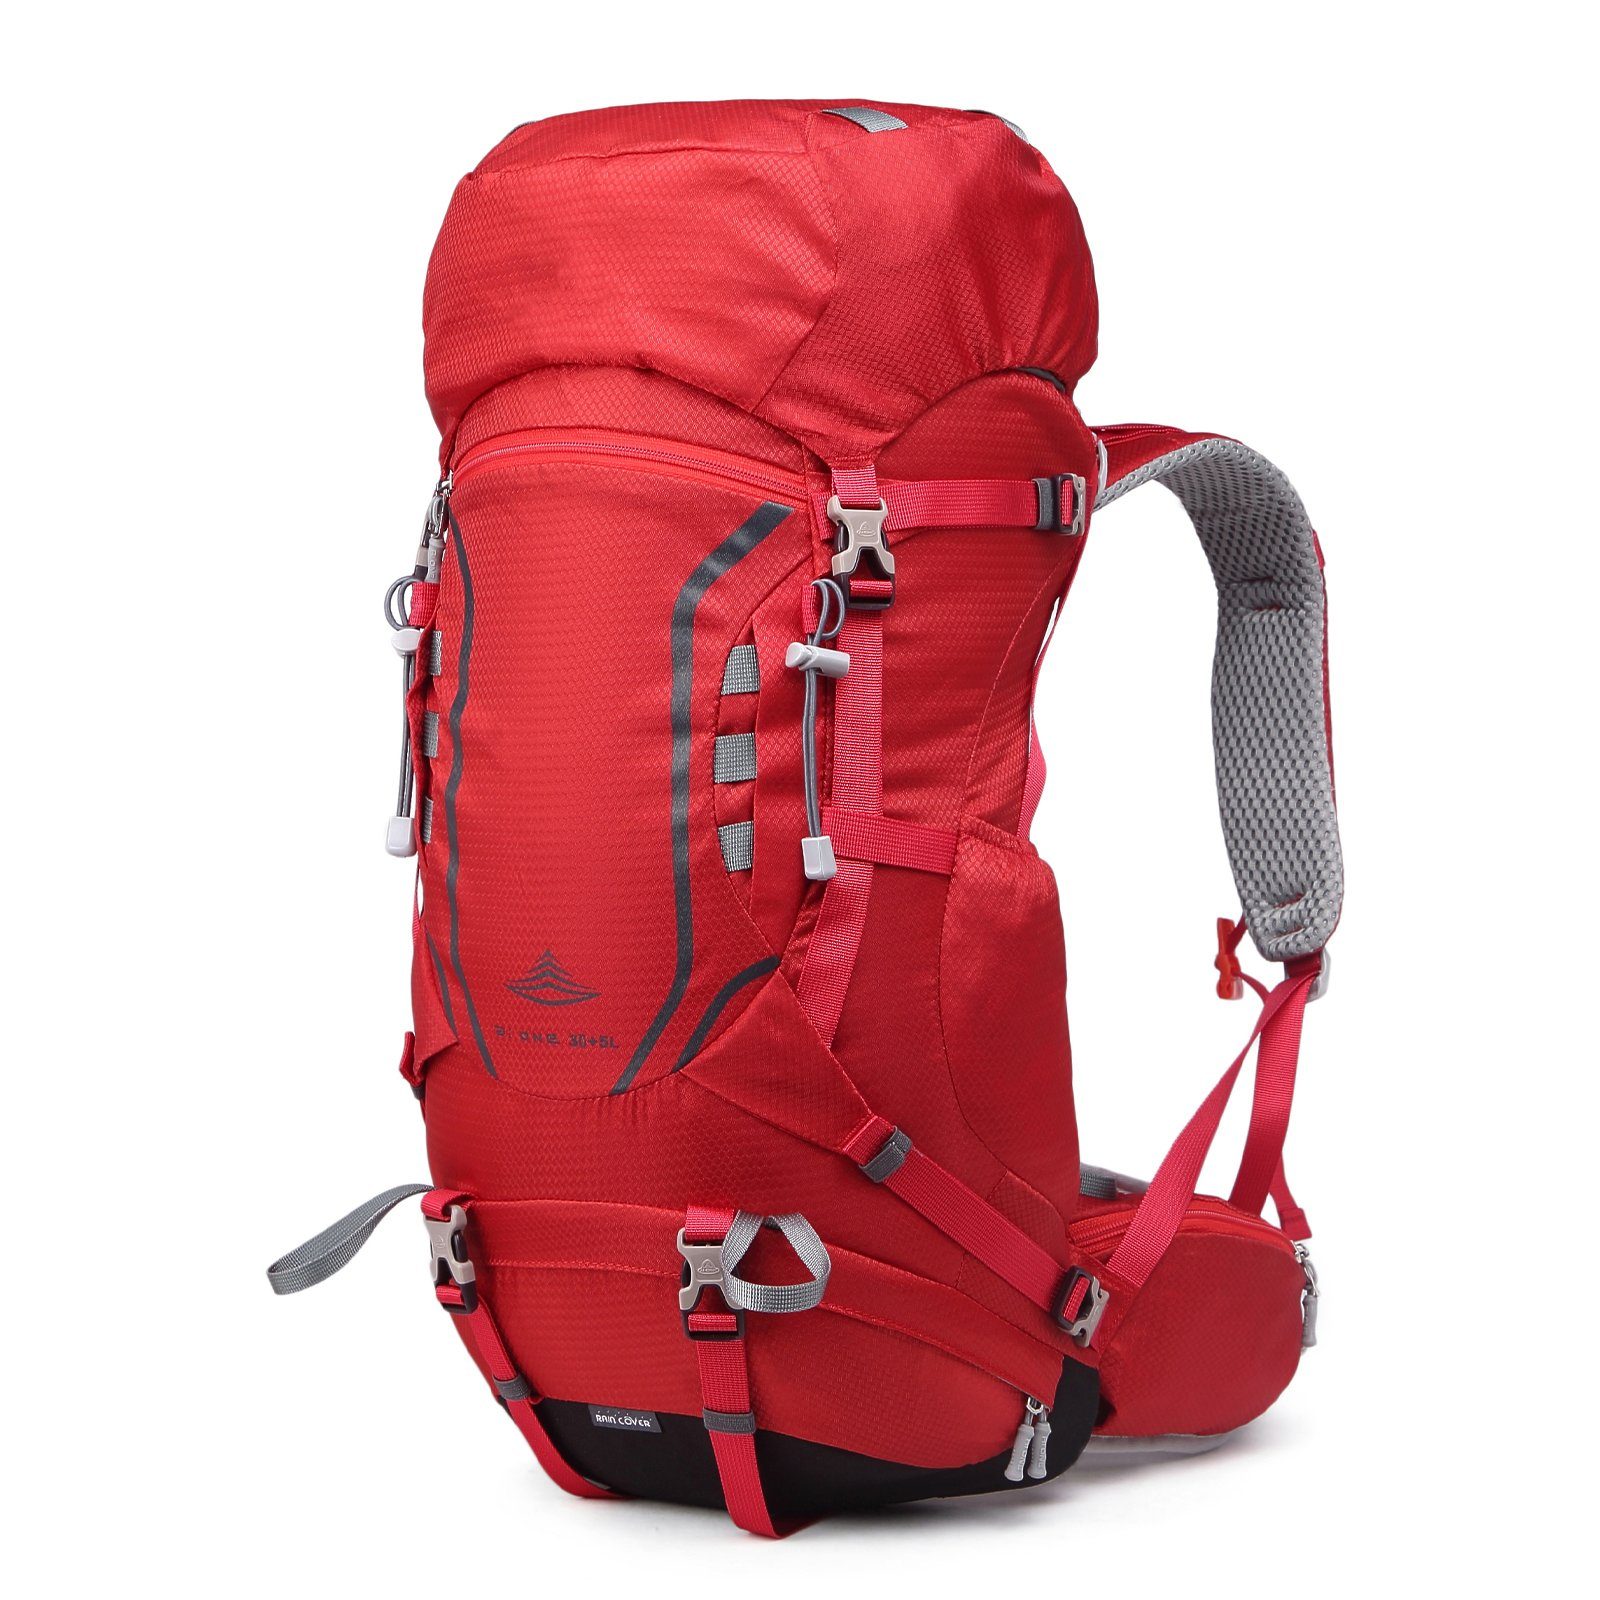 Wanderrucksack Outdoor Camping Rückenbelüftung Trekking für Regenschutz Rot TAN.TOMI 35L Reisen Regenschutz), Wanderrucksack mit mit (Einschließlich Großer (30L+5L)